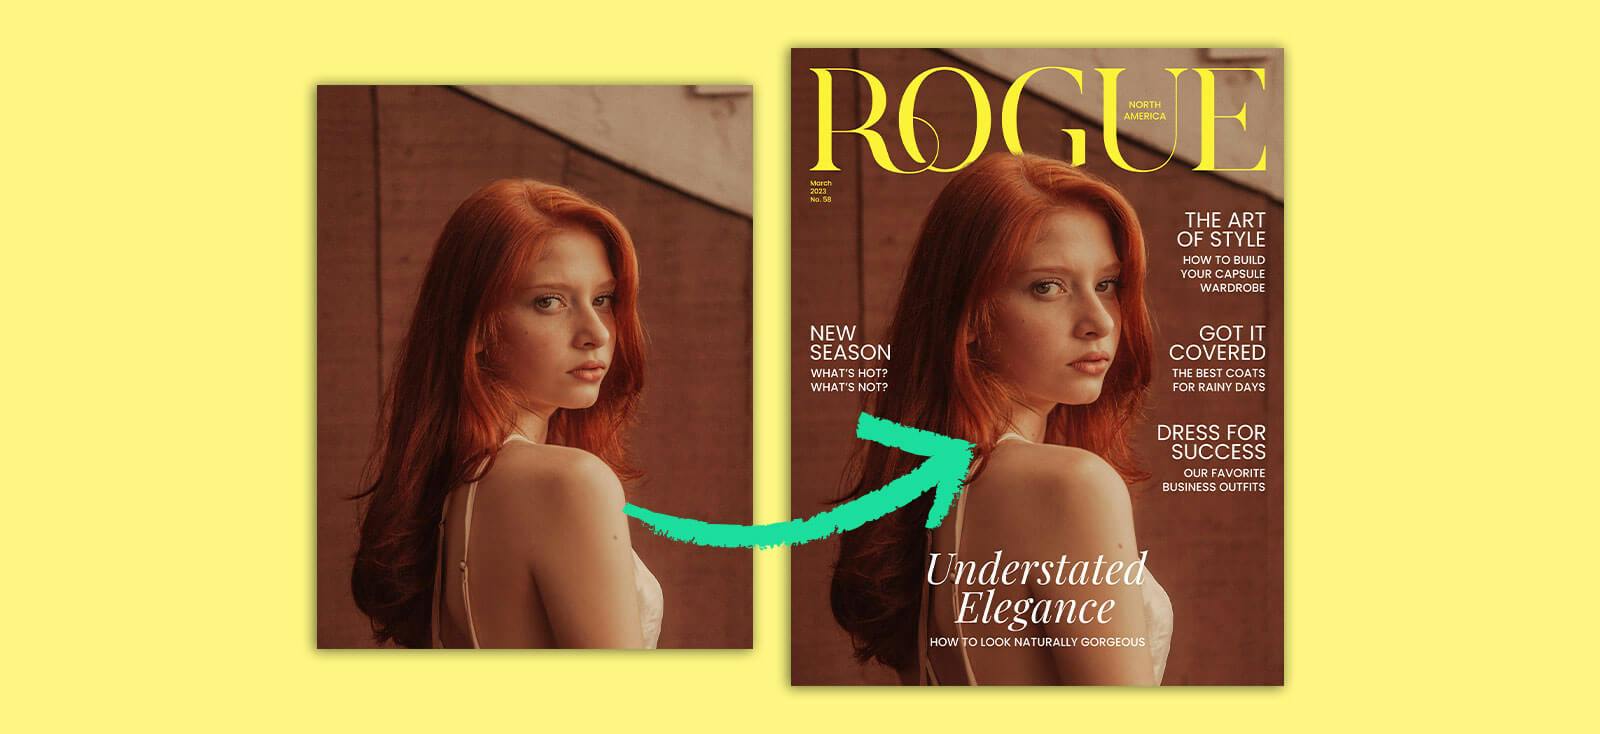 Vogue Style Magazine Cover Design